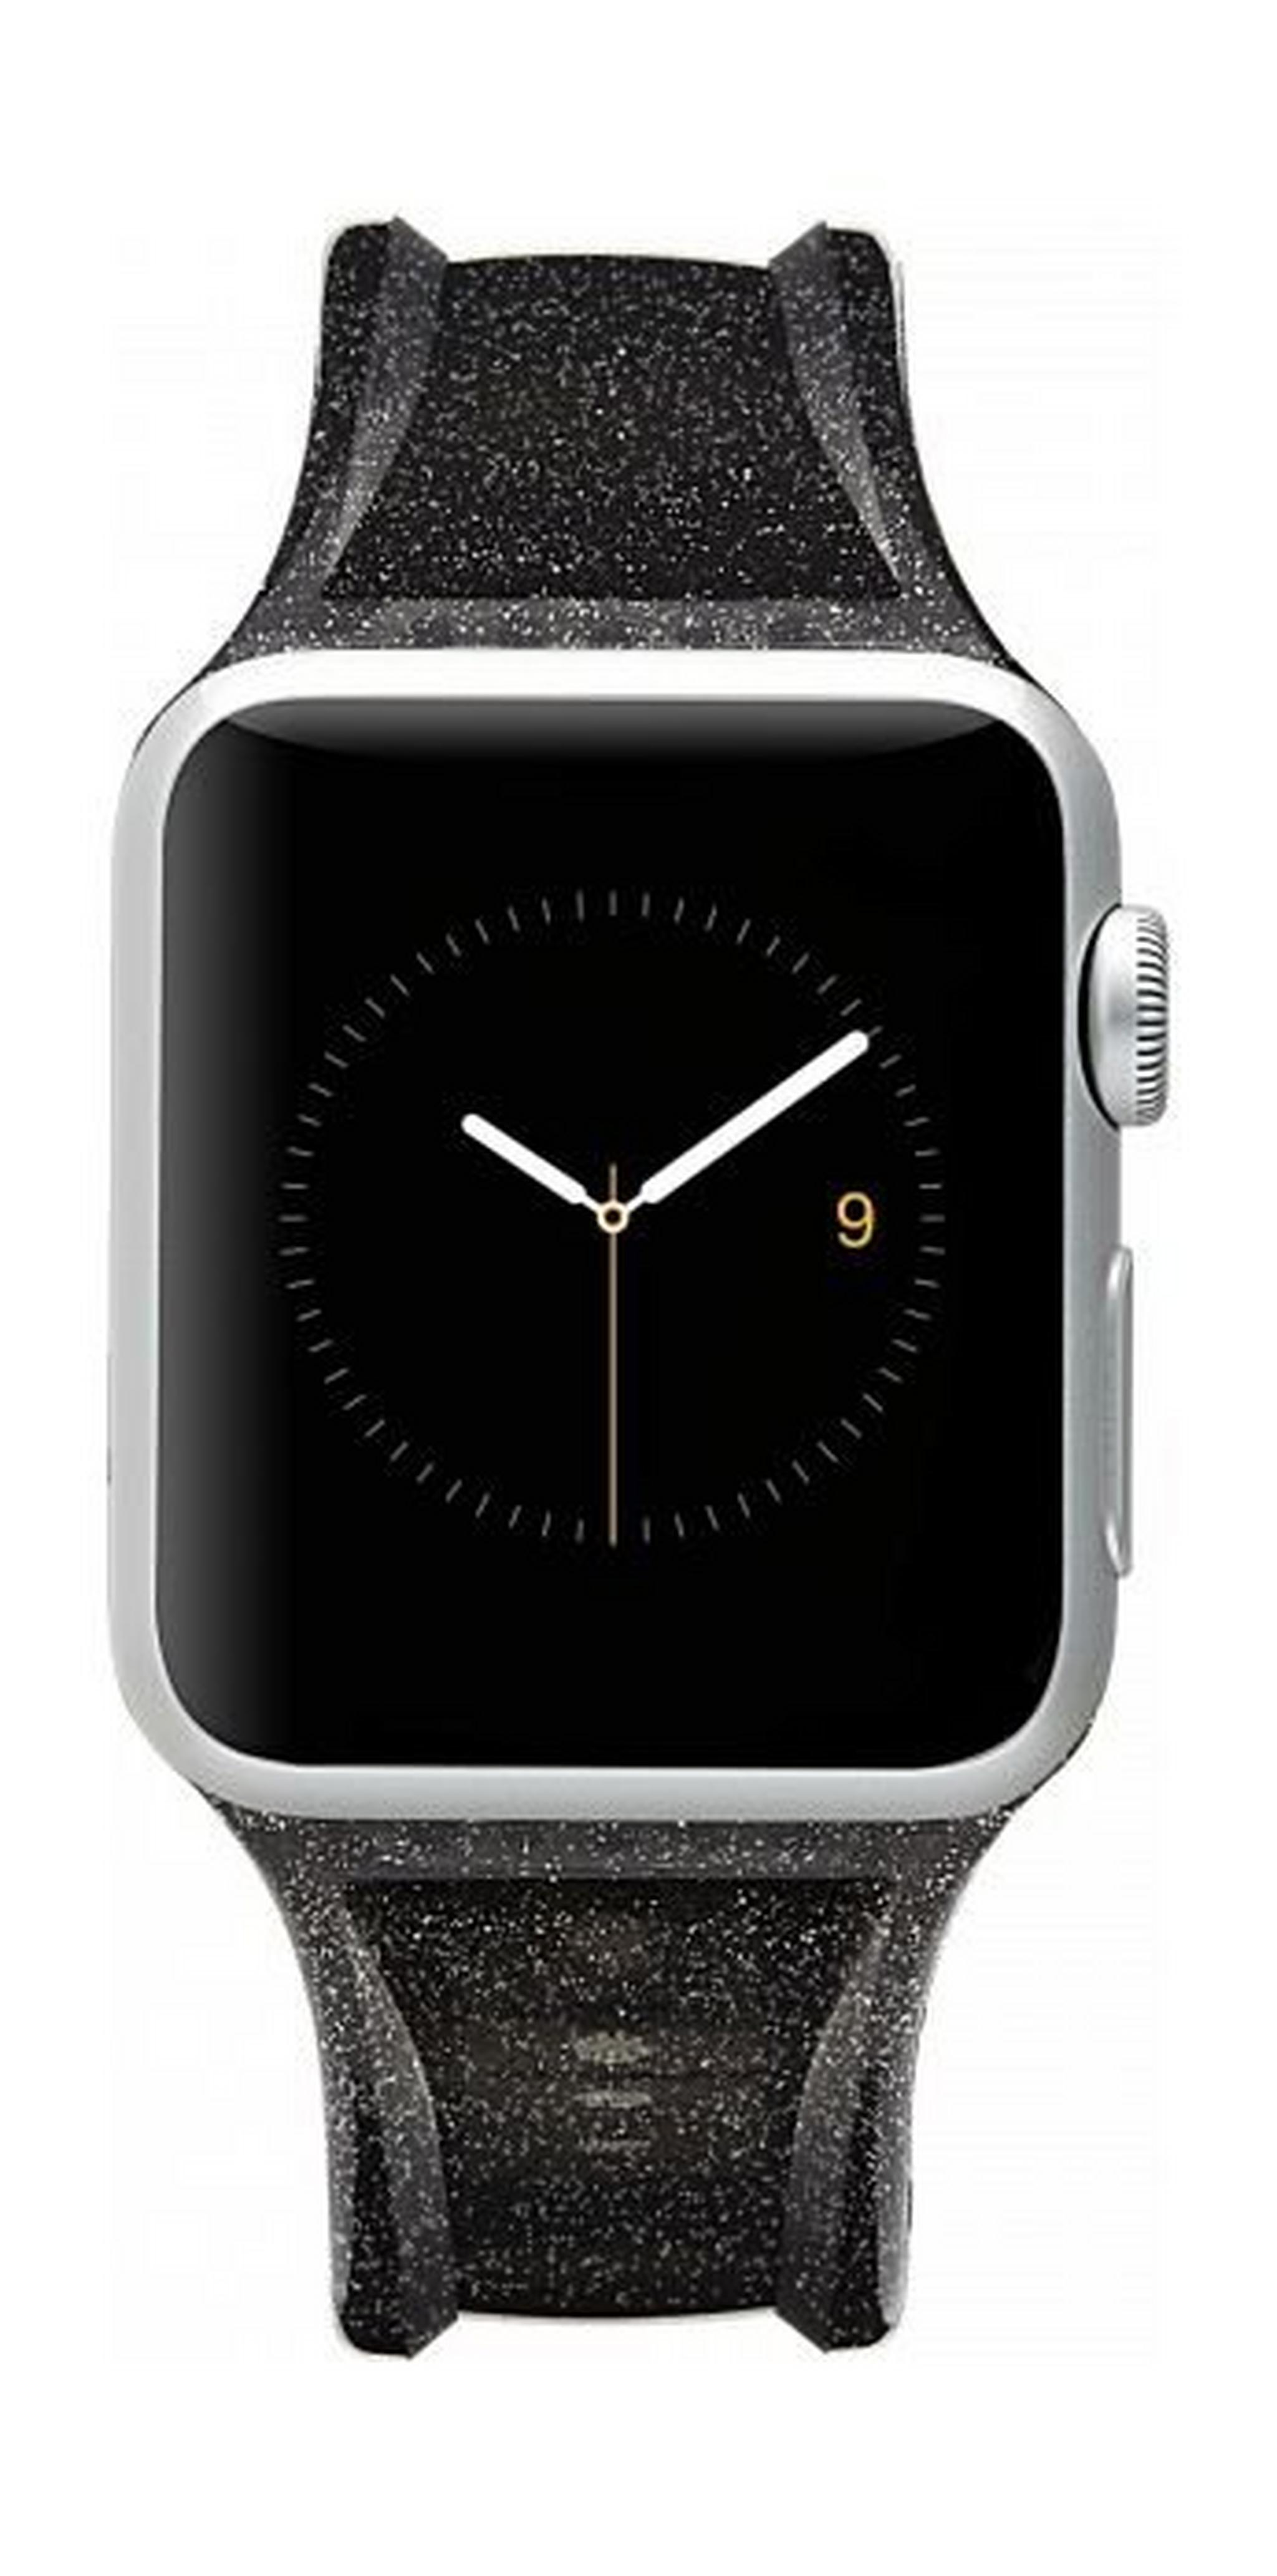 Case Mate Apple Watch 42mm Watch Band - Black